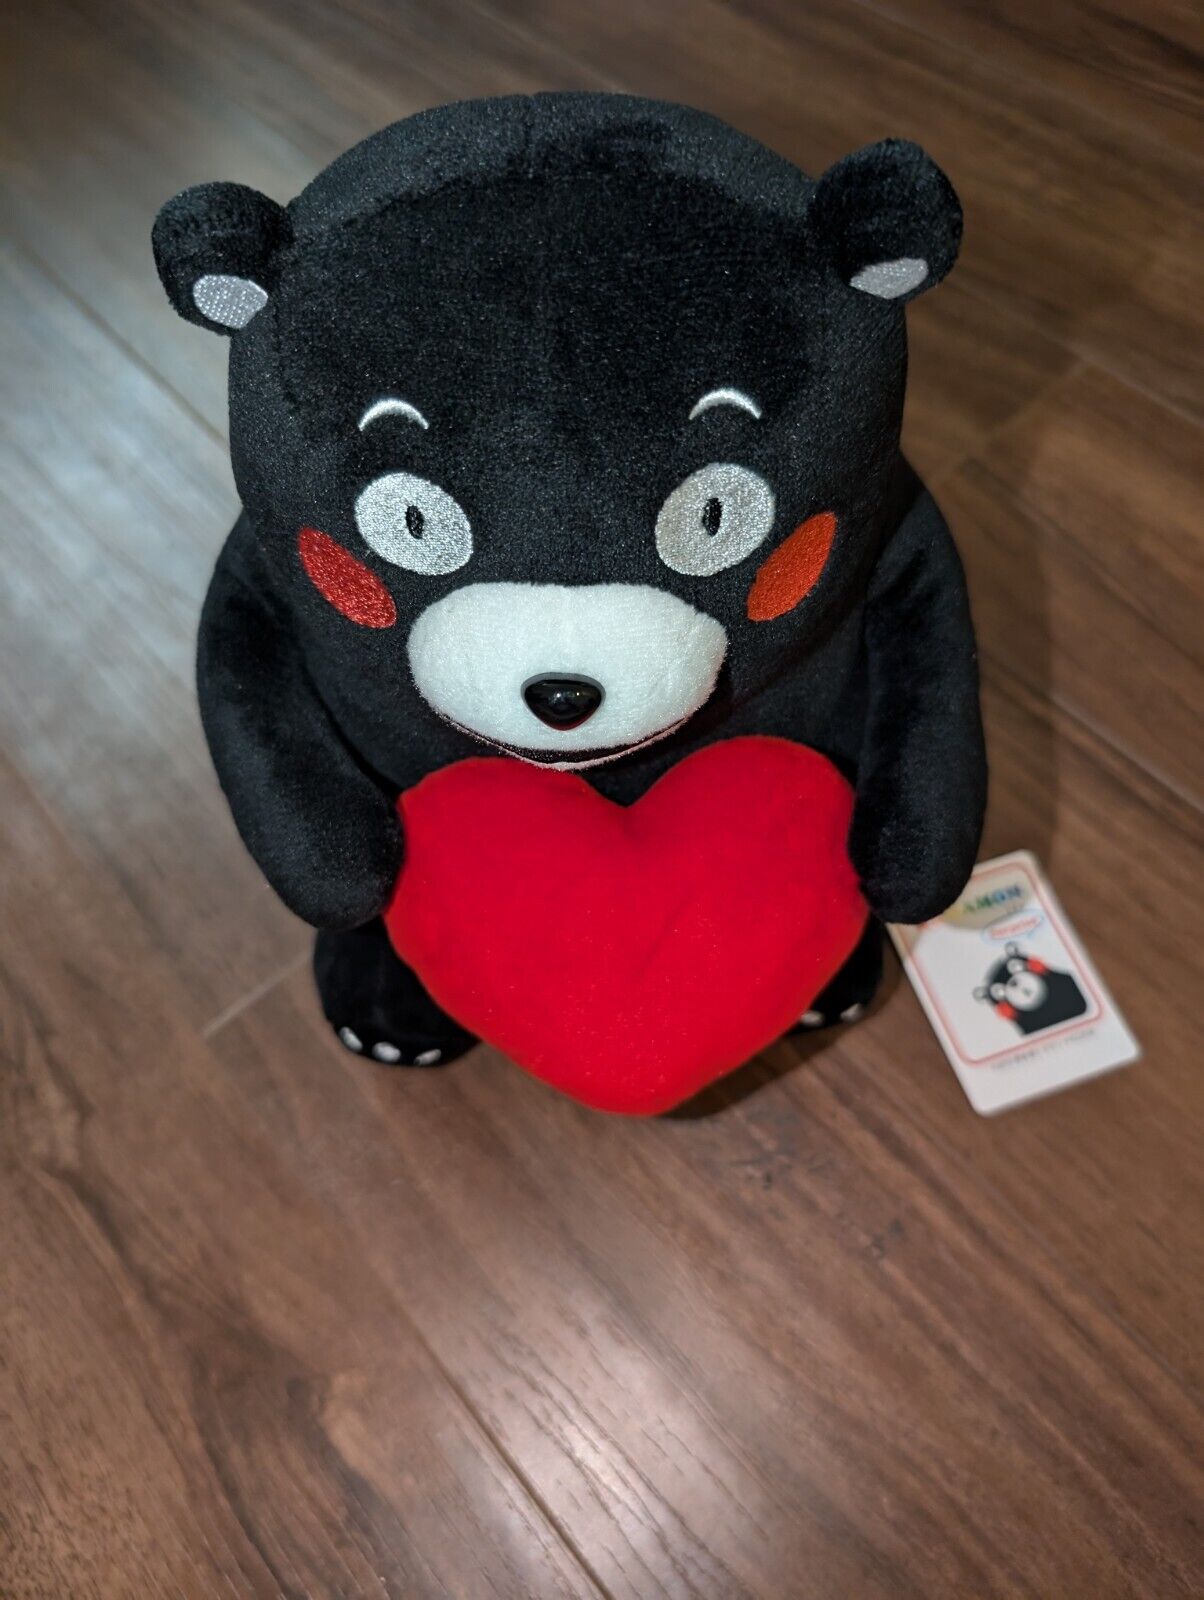  New With TAG 2010 Kumamon Black Bear Japan Mascot Plush Toy Holding Heart Rare